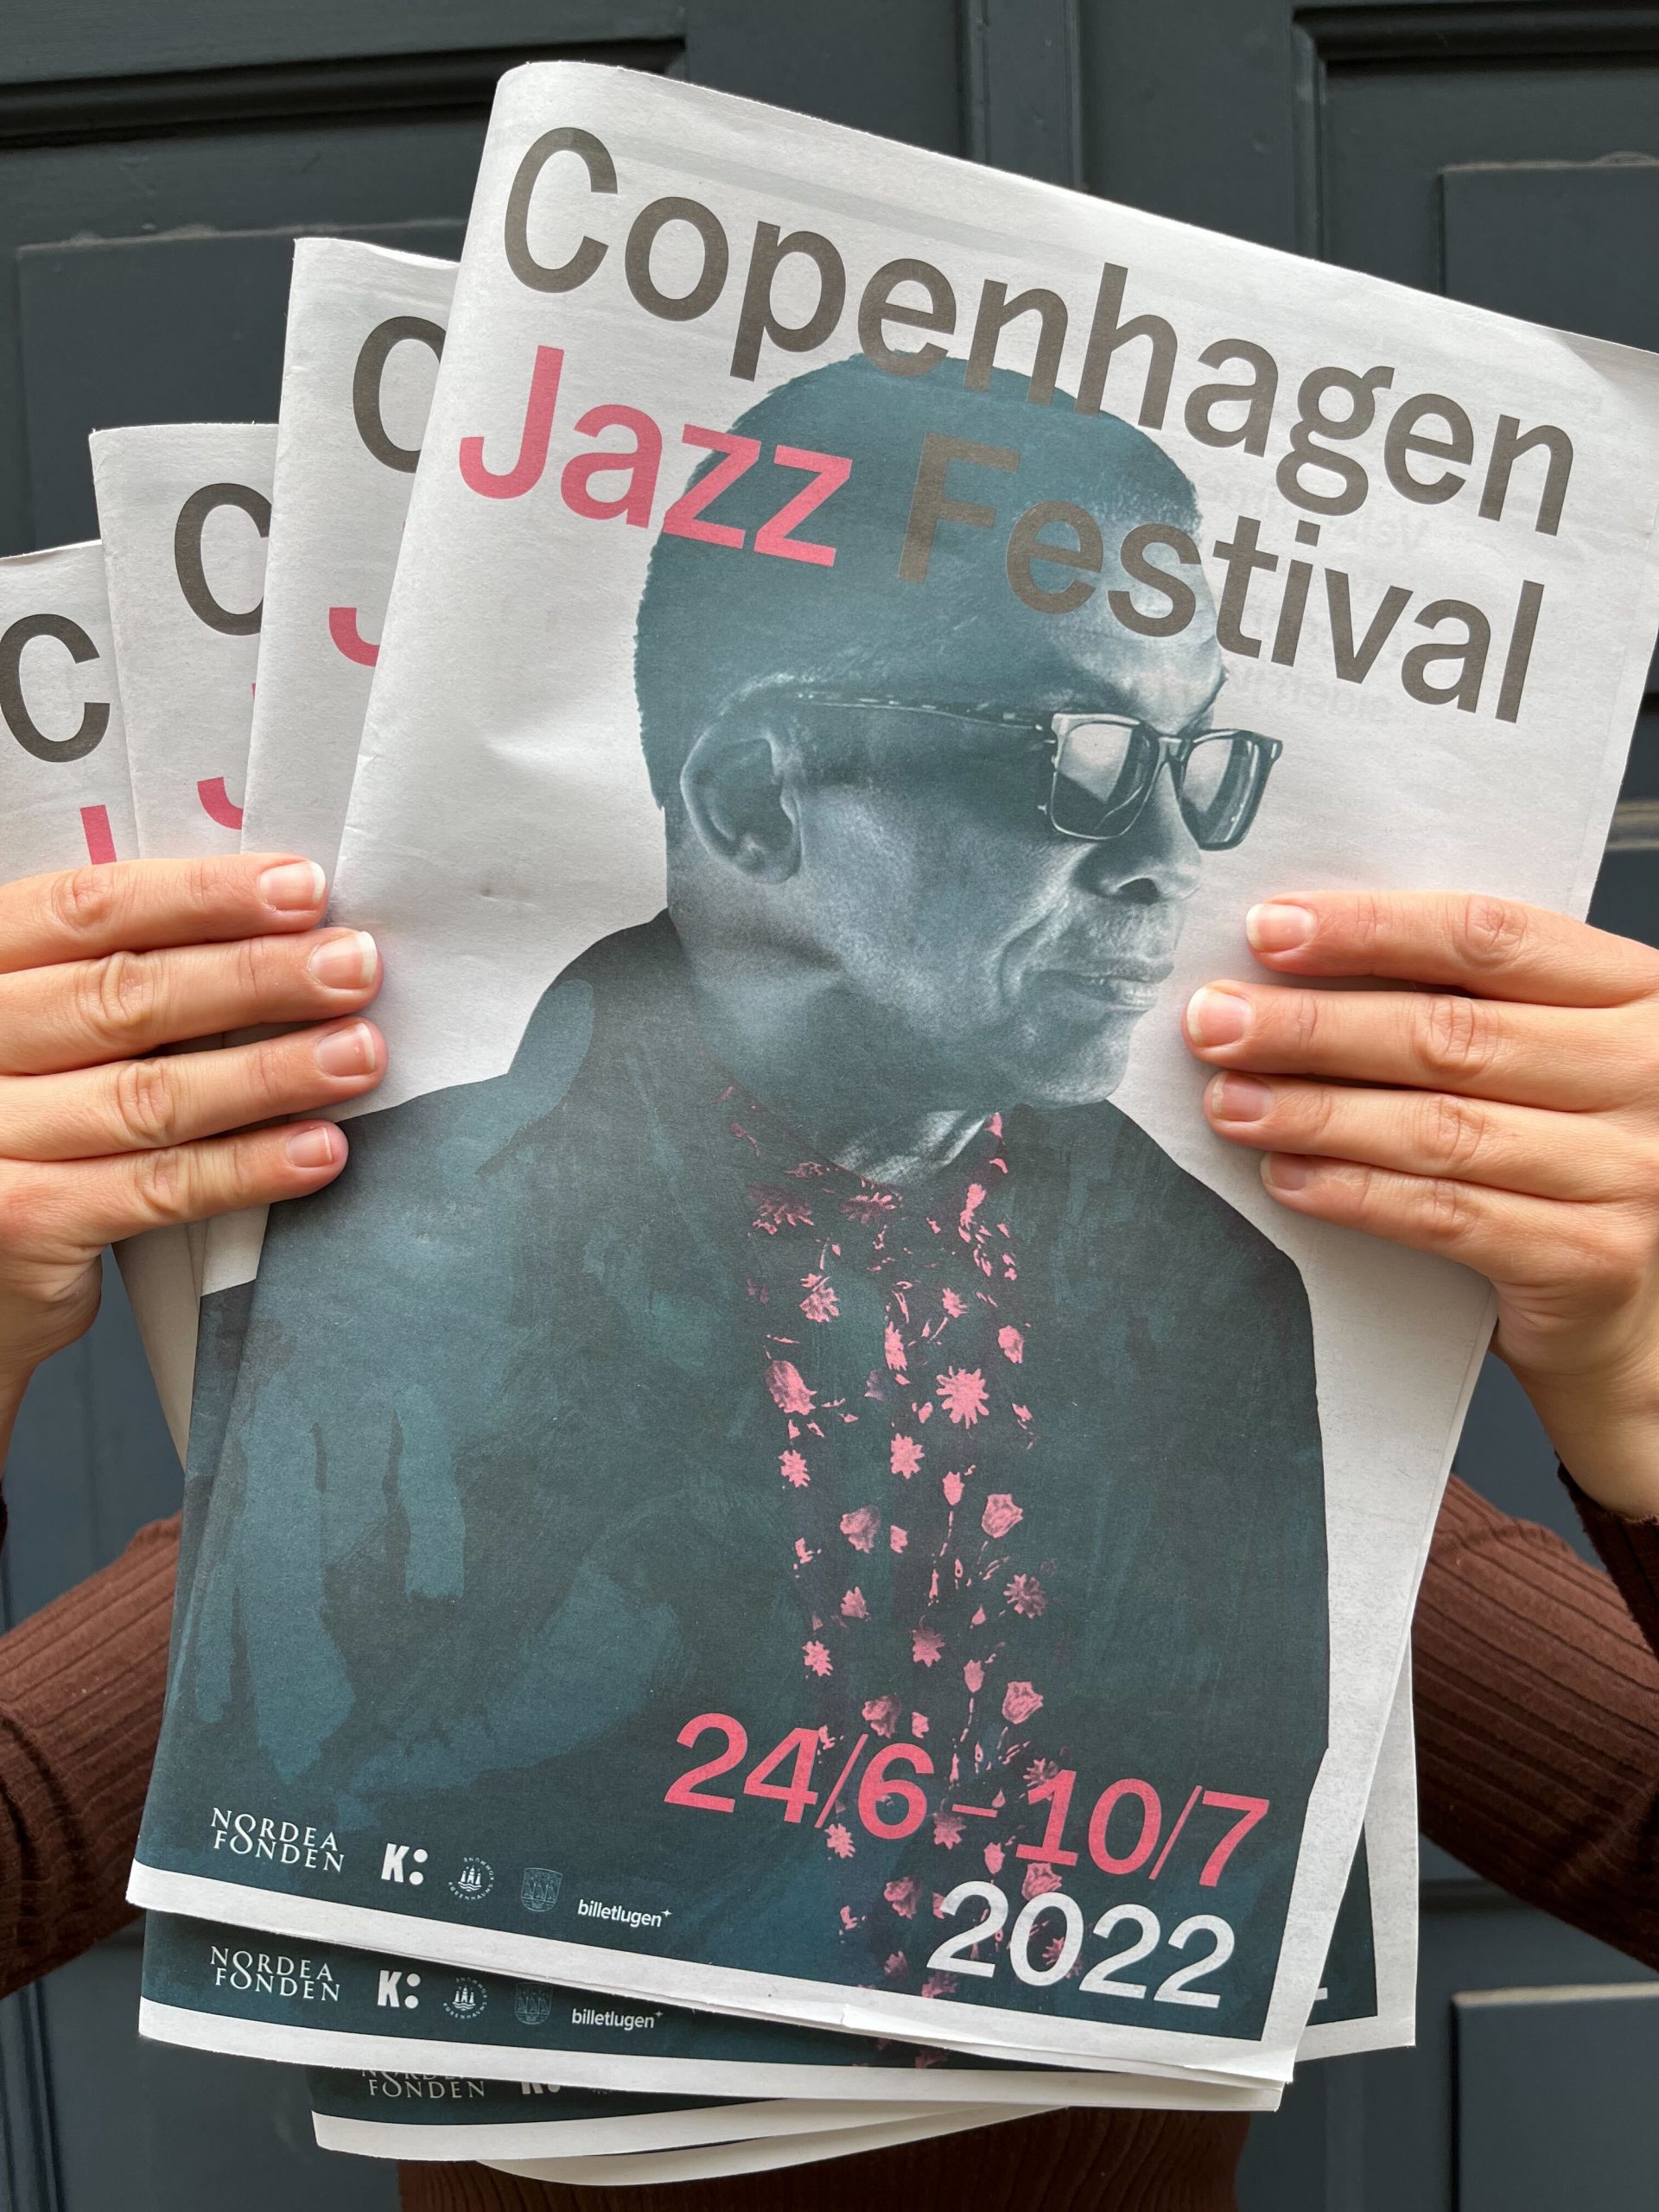 Copenhagen Jazz Festival 2022